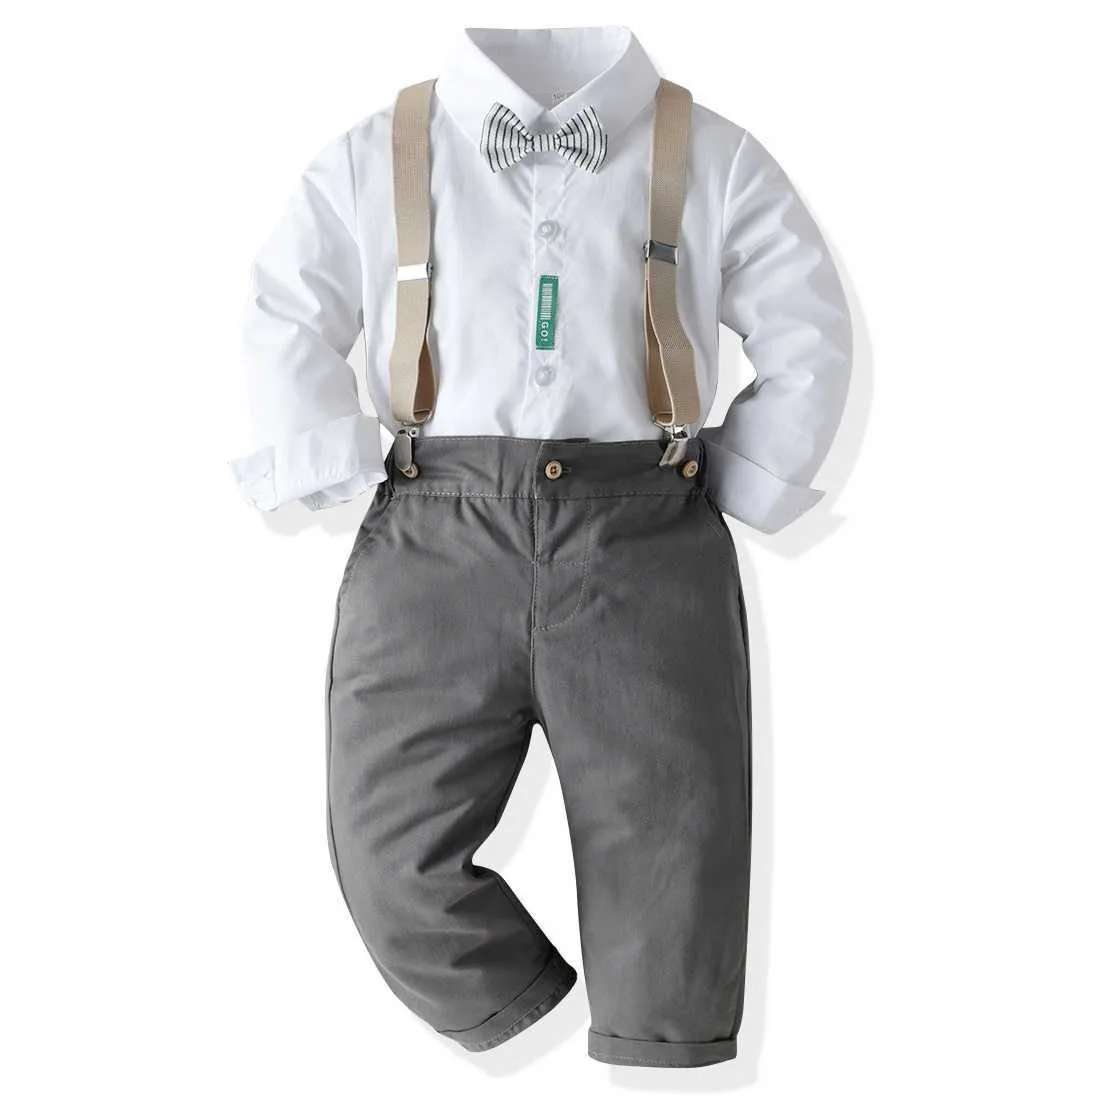 2021 Trendy kinder Kleidung Sets Weißes Hemd Formelle KleidungBoutique Kinder Kleidung Gentleman Anzug Jungen Outfits Ropa De Bebe H1023